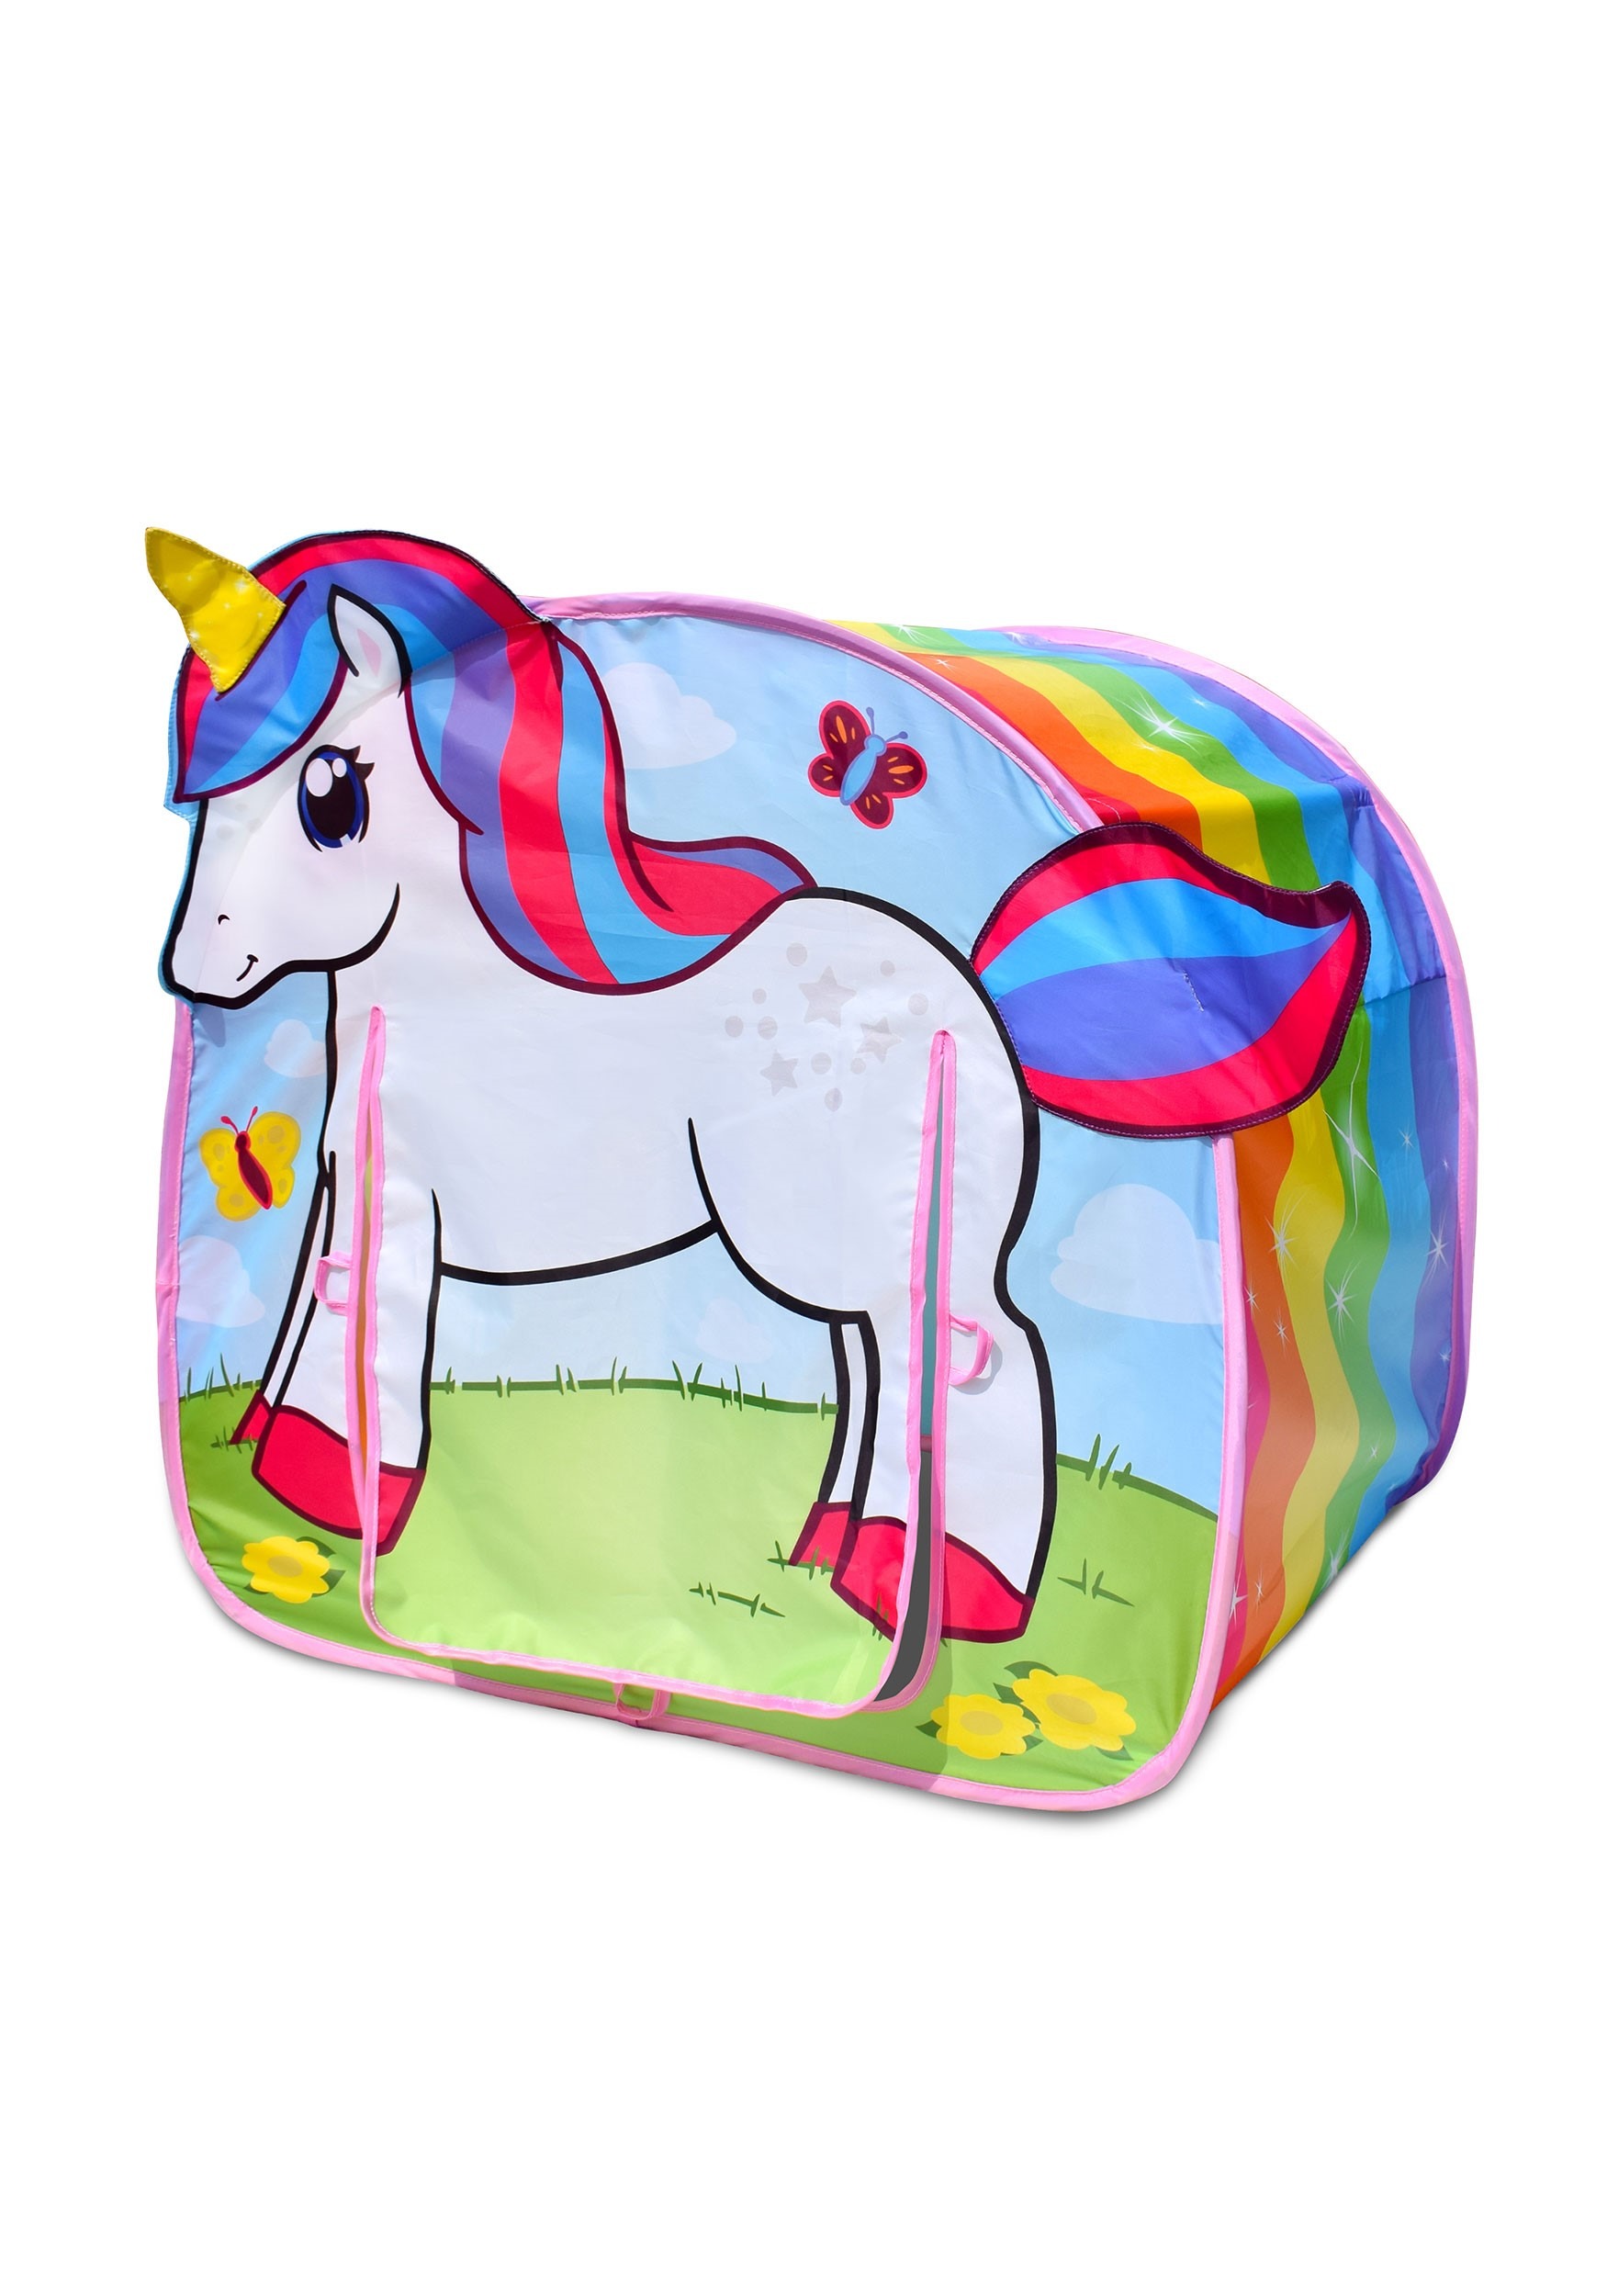 Pop-Up Unicorn Rainbow Dream Play Tent